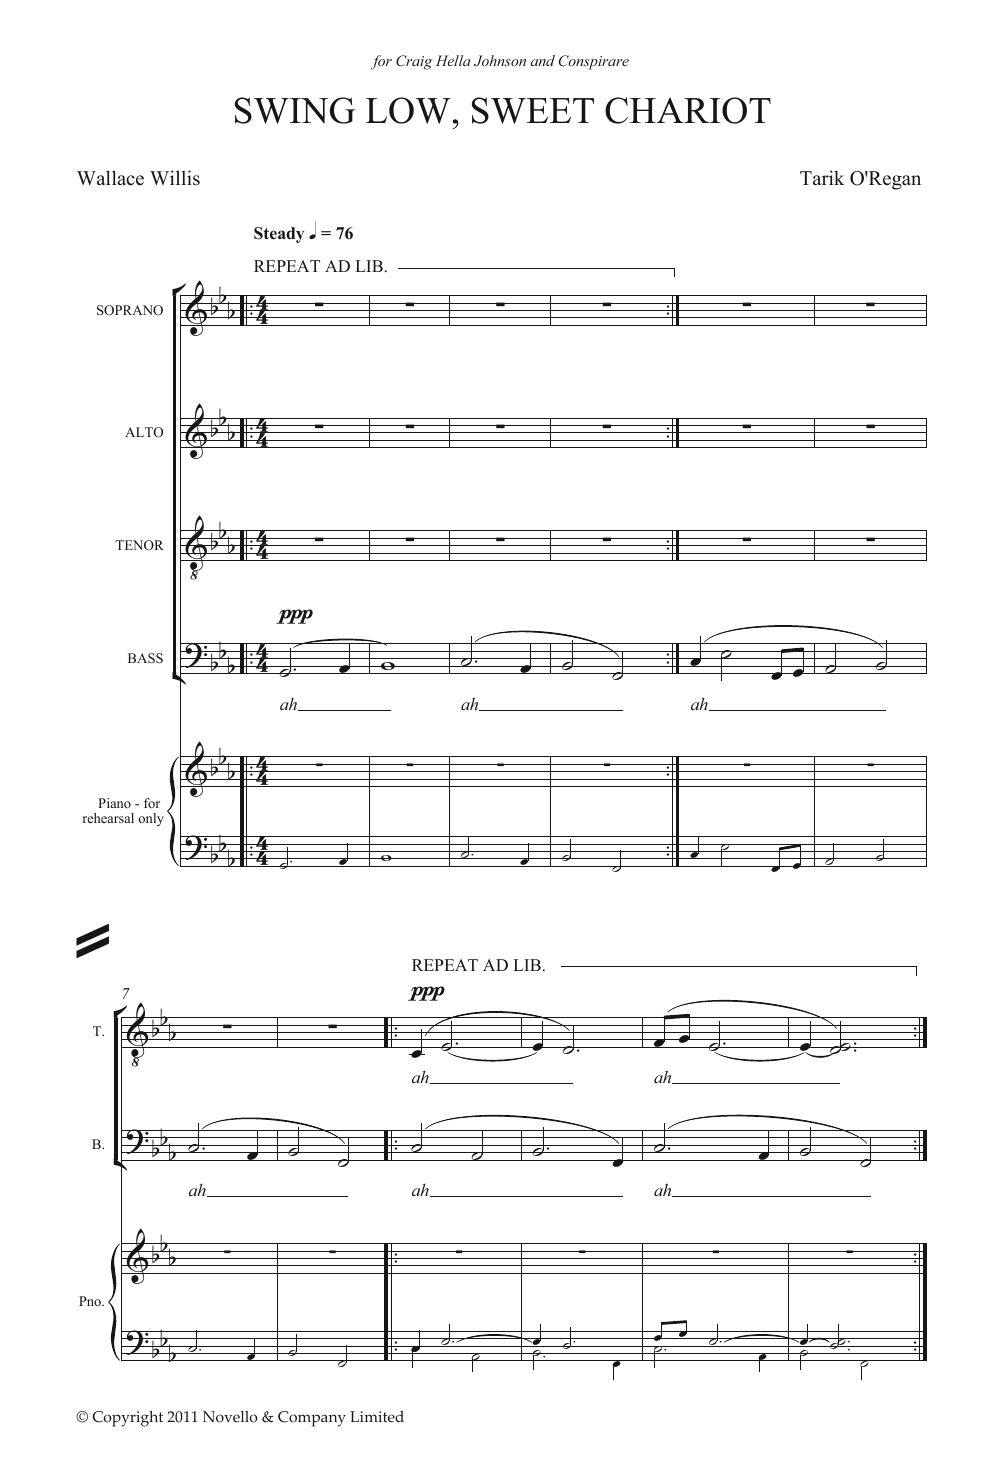 Download Tarik O'Regan Swing Low, Sweet Chariot Sheet Music and learn how to play SATB Choir PDF digital score in minutes